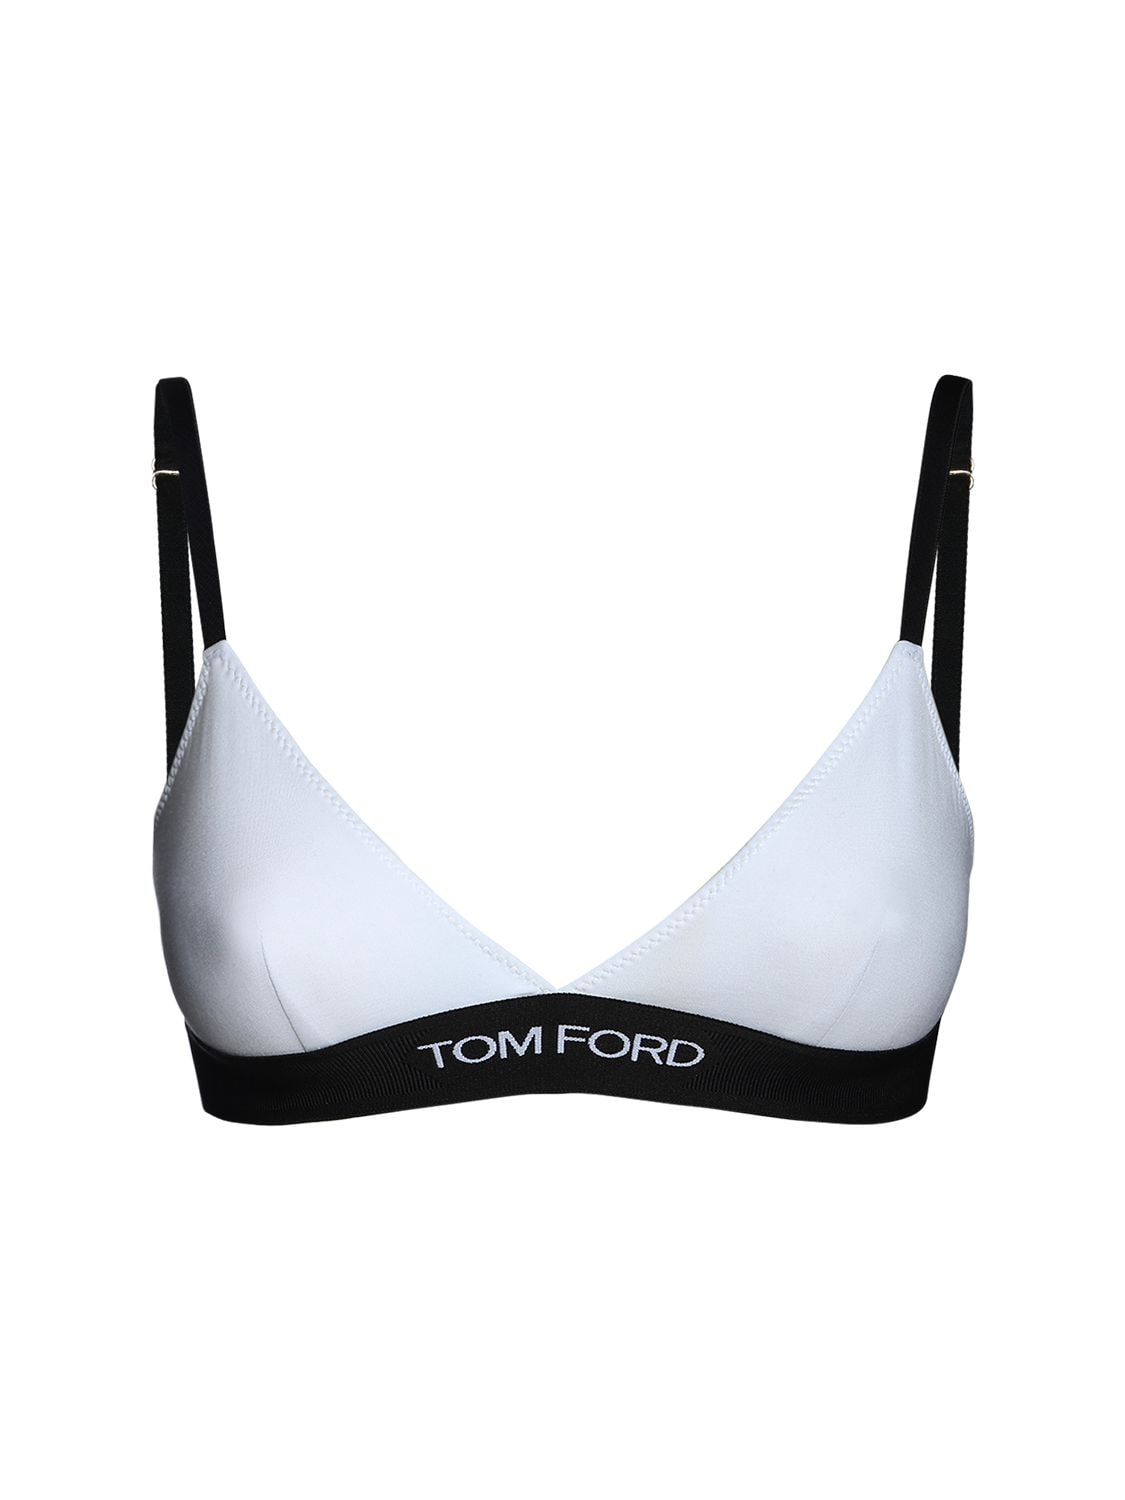 TOM FORD Black logo underband jersey bra